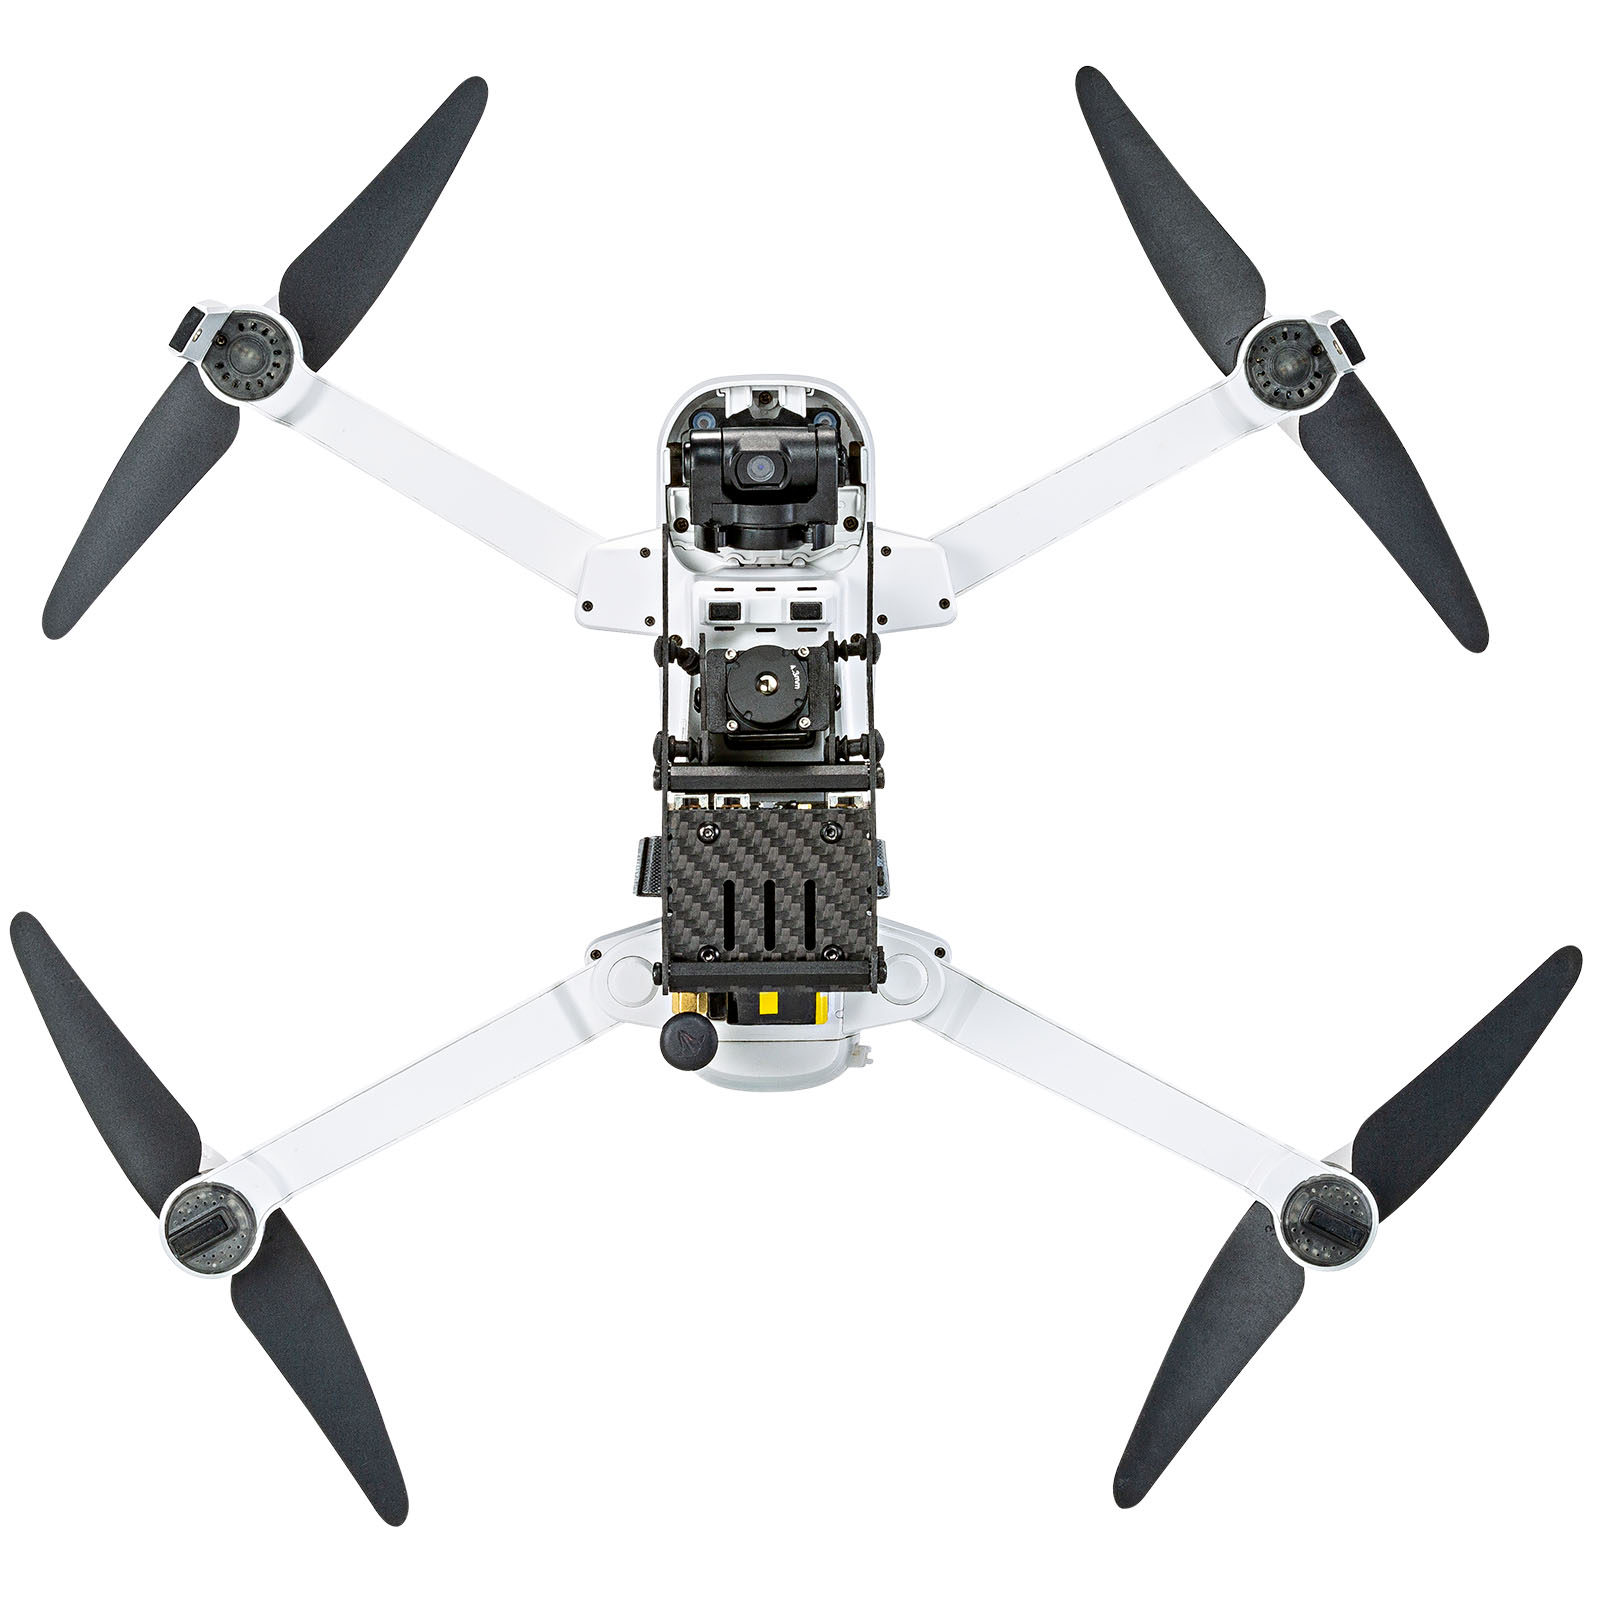 Lahoux Buzzard Drohne mit Wärmebildkamera